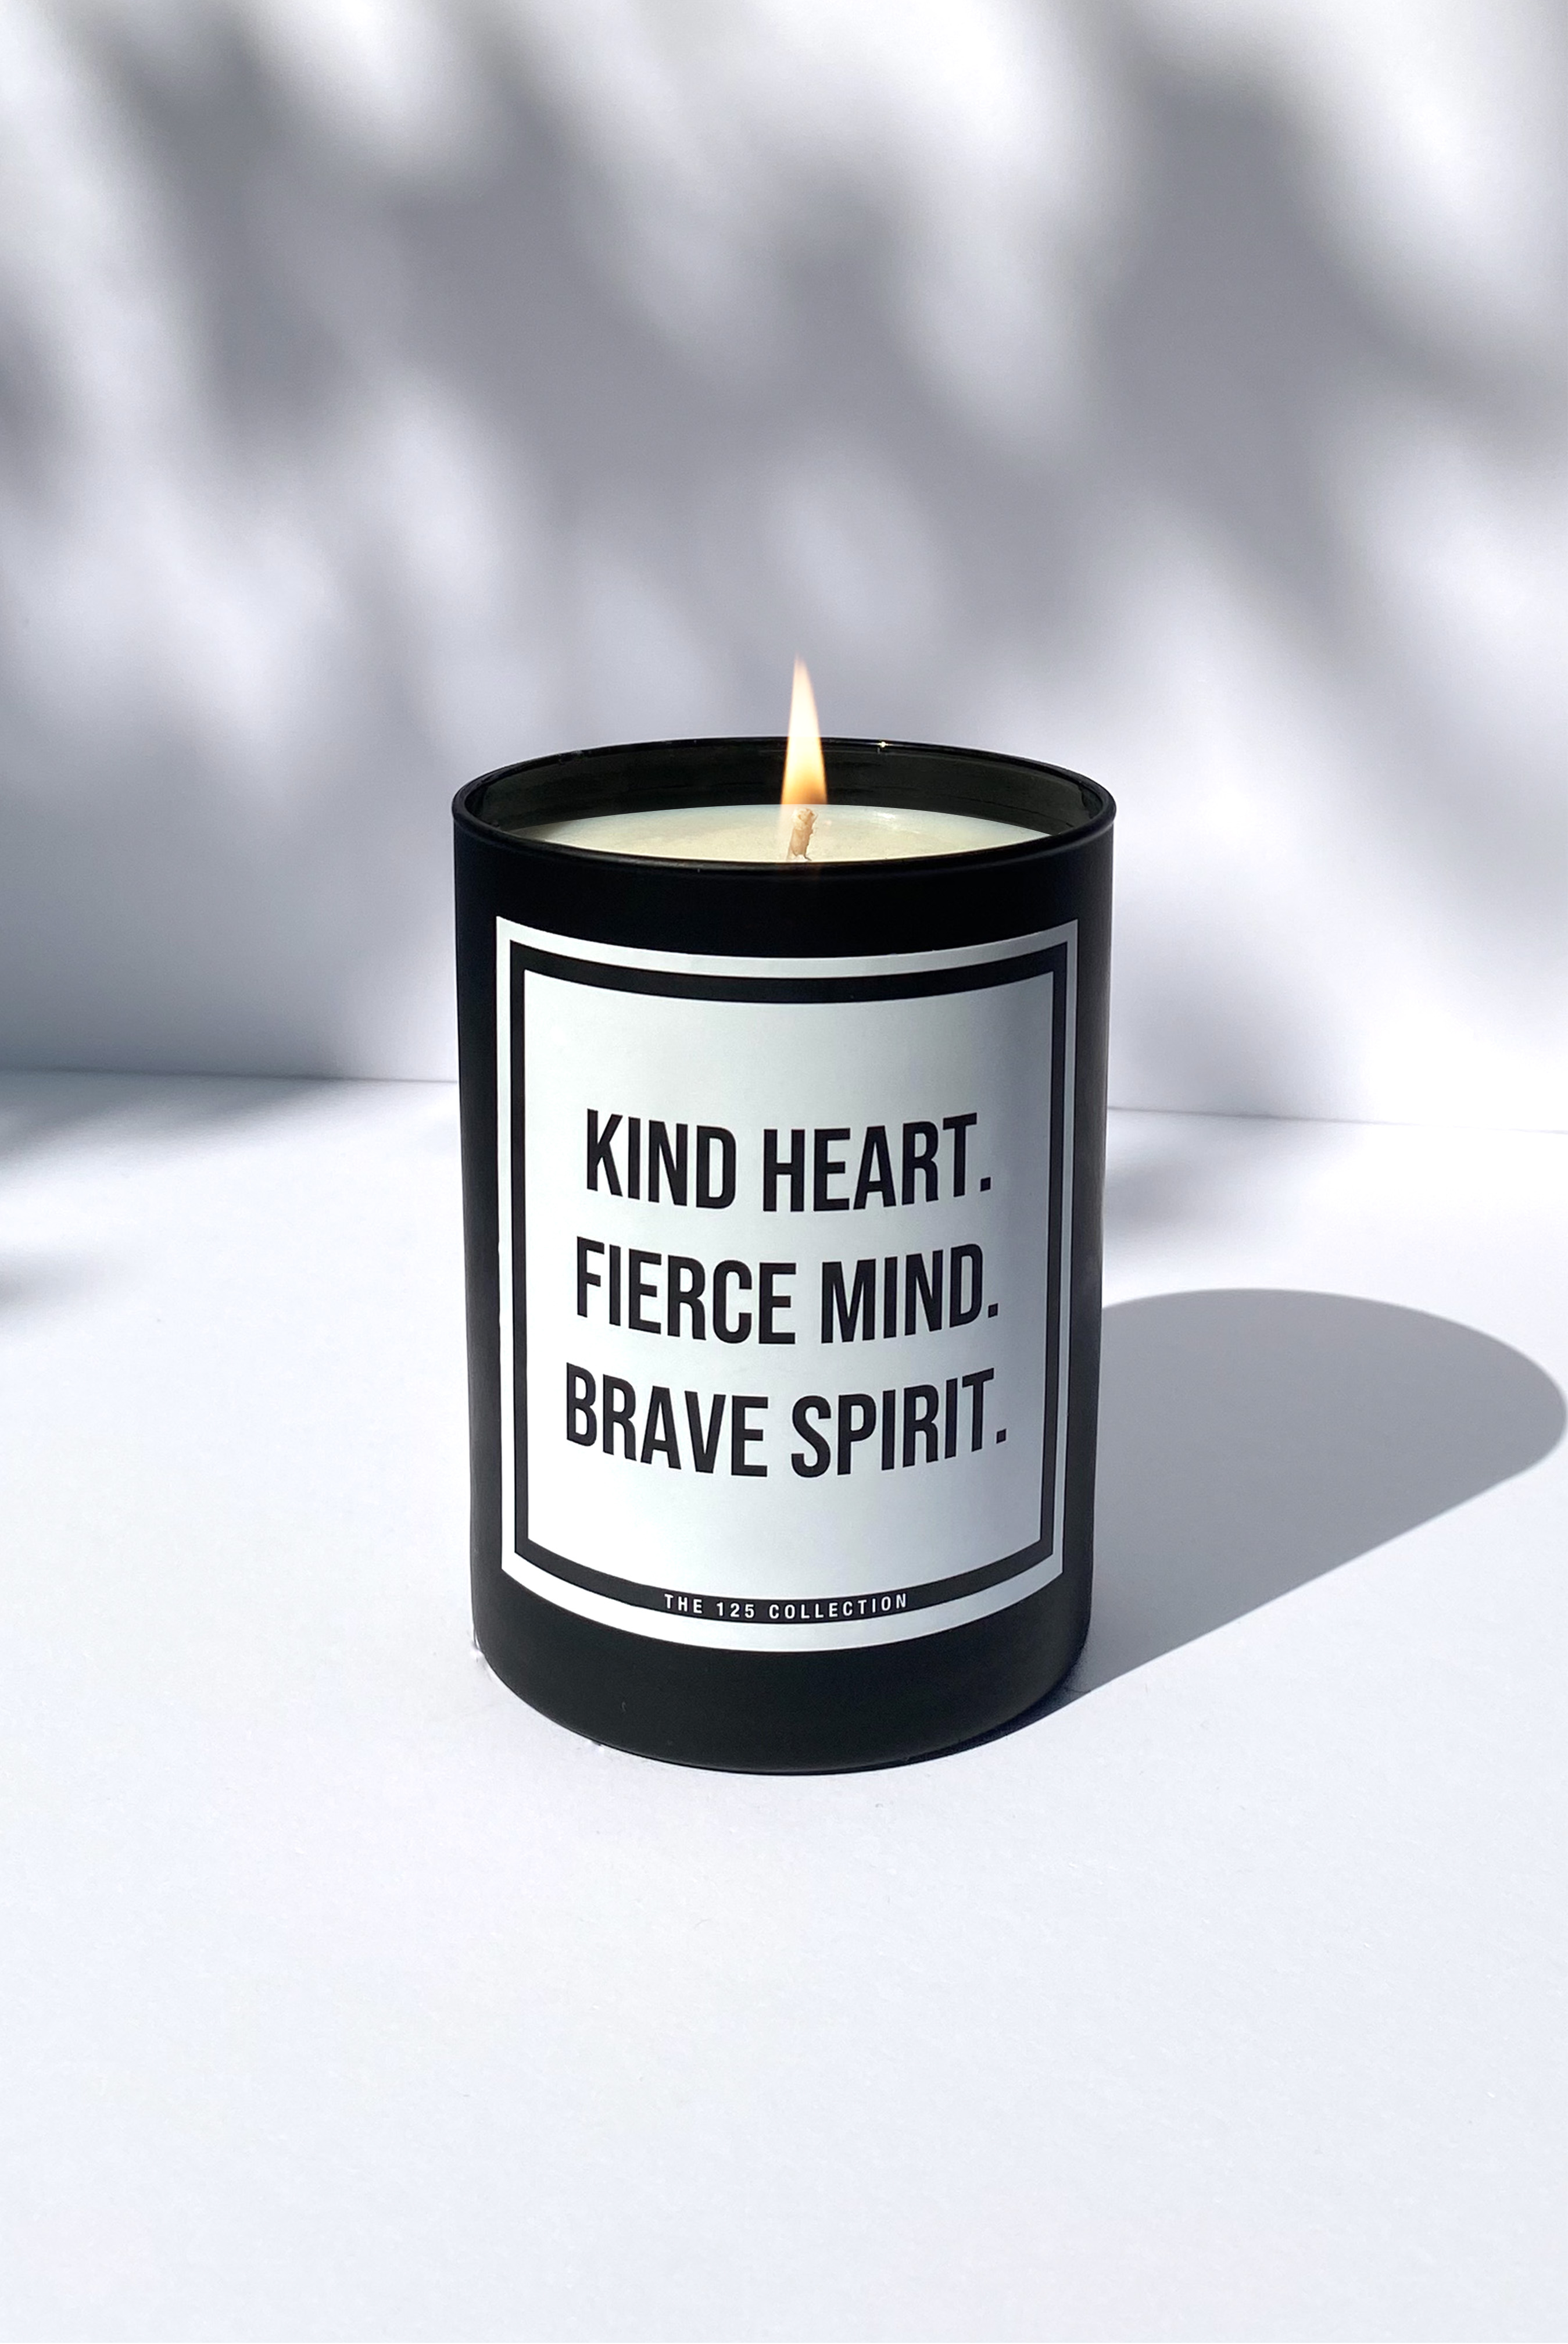 Kind Heart. Fierce Mind. Brave Spirit.